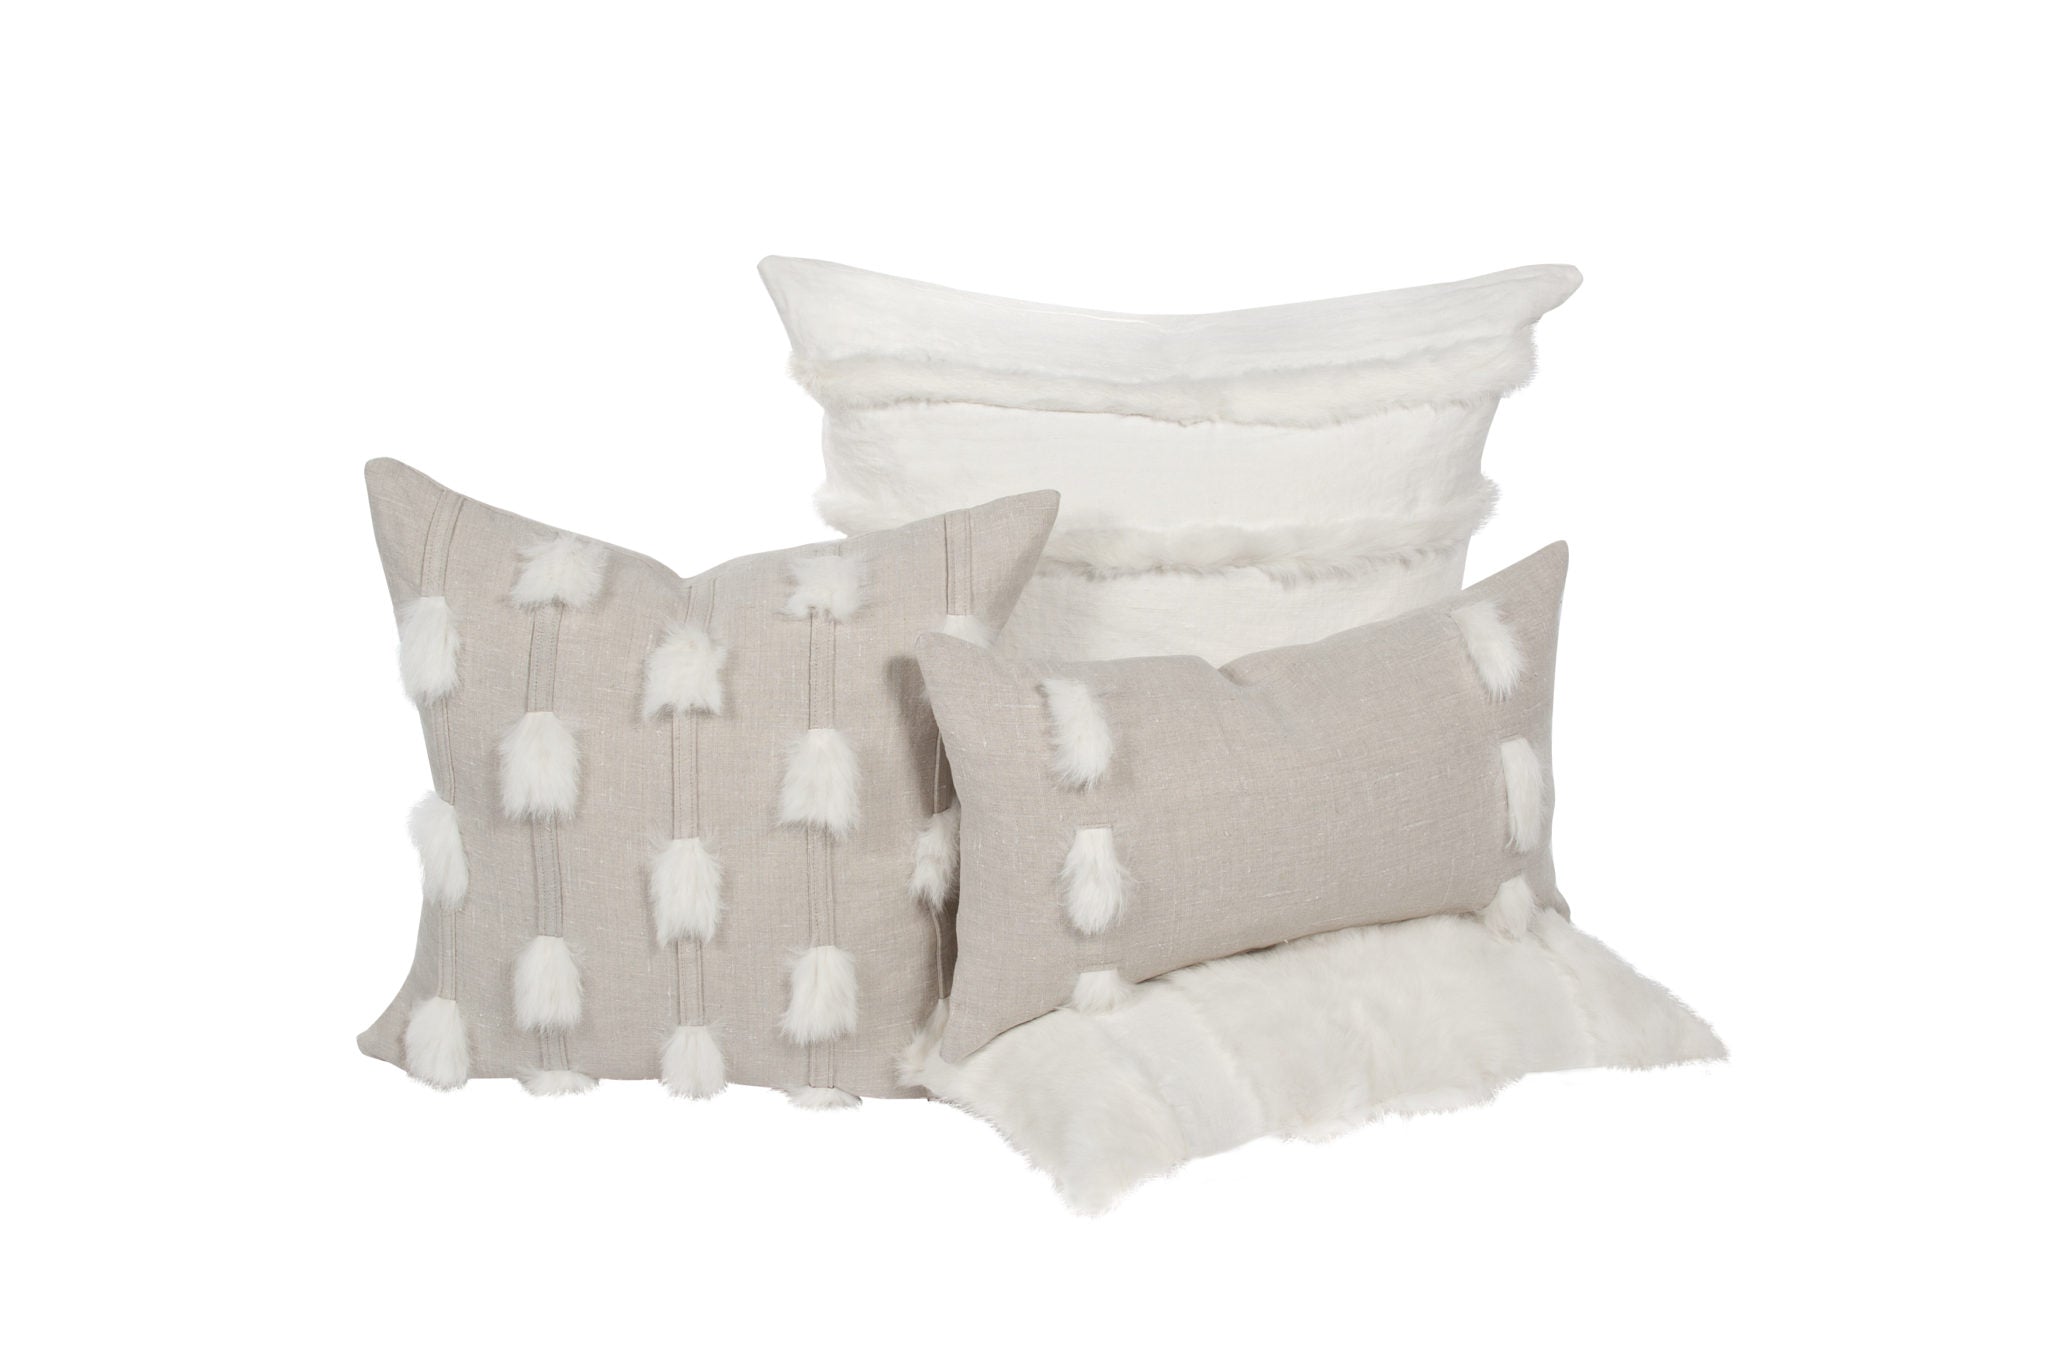 three matching decorative pillows